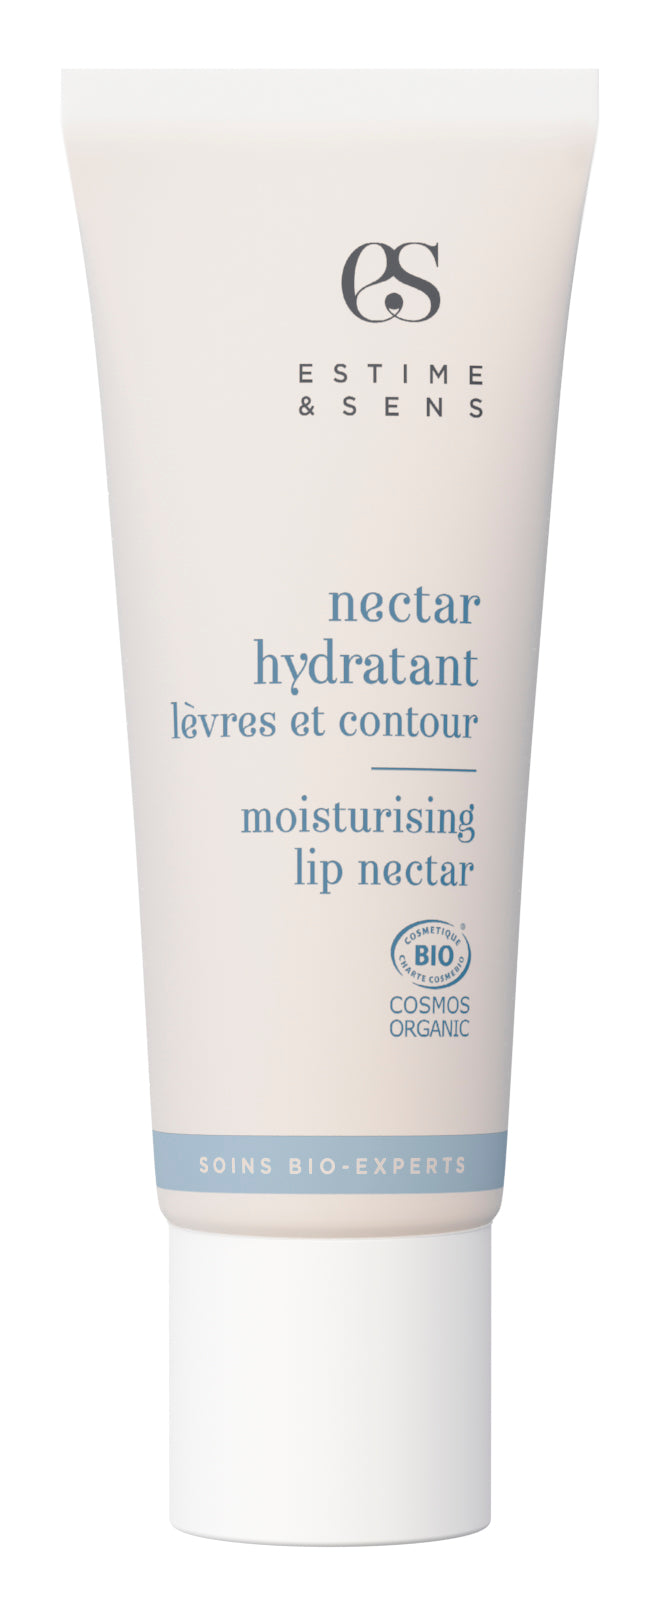 Lip moisturizing nectar